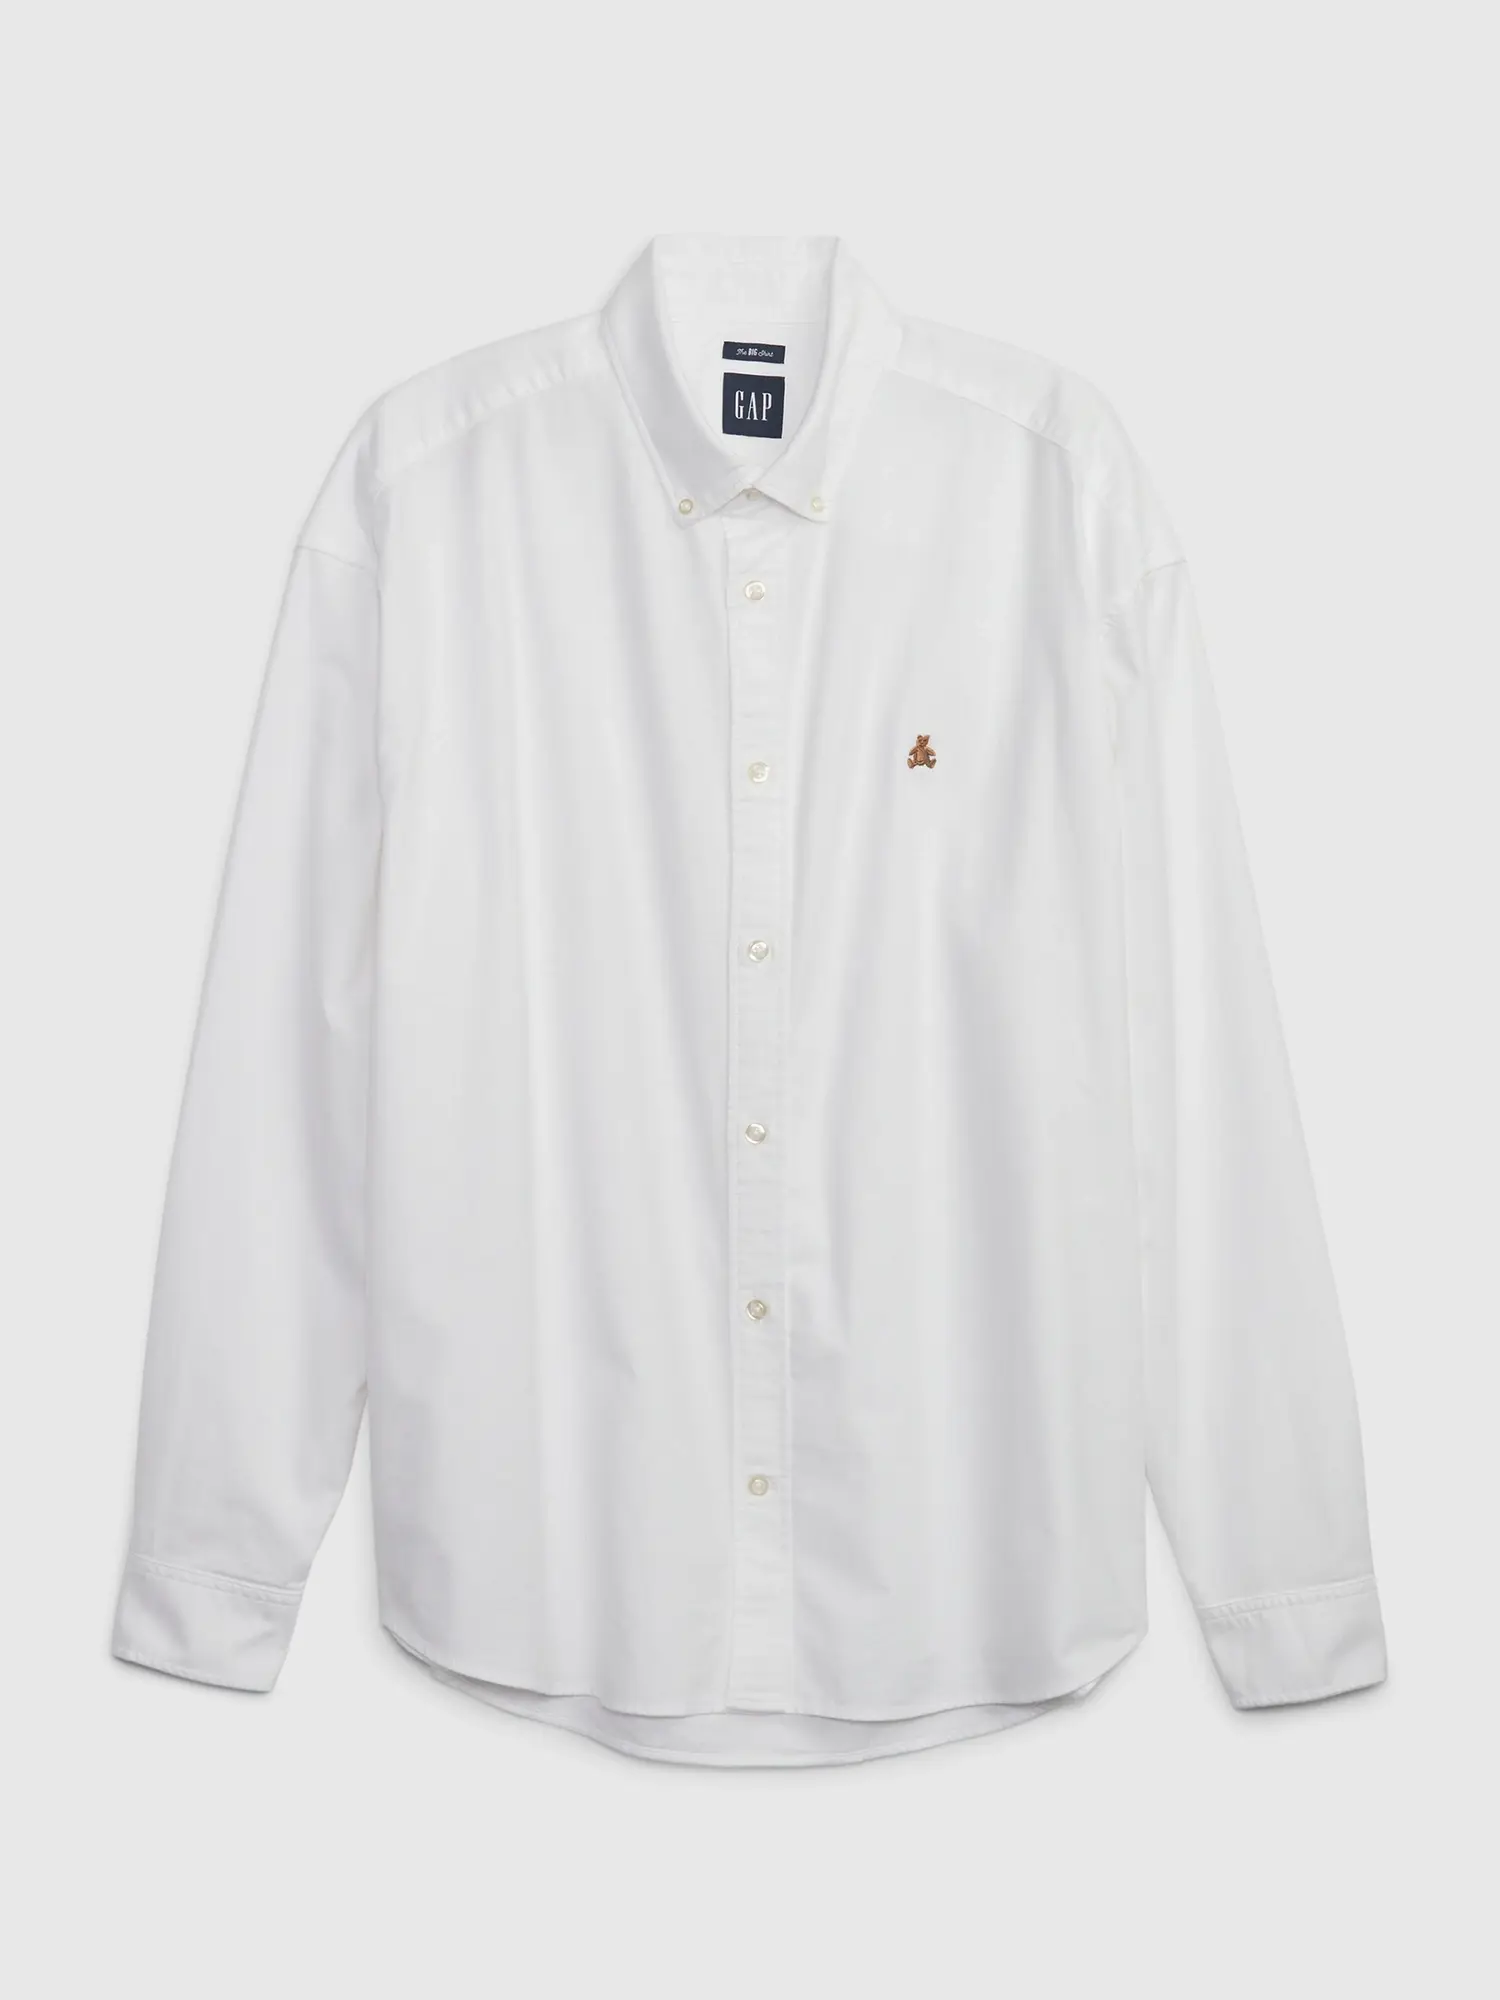 Gap Brannan Bear Oxford Shirt in Untucked Fit white. 1